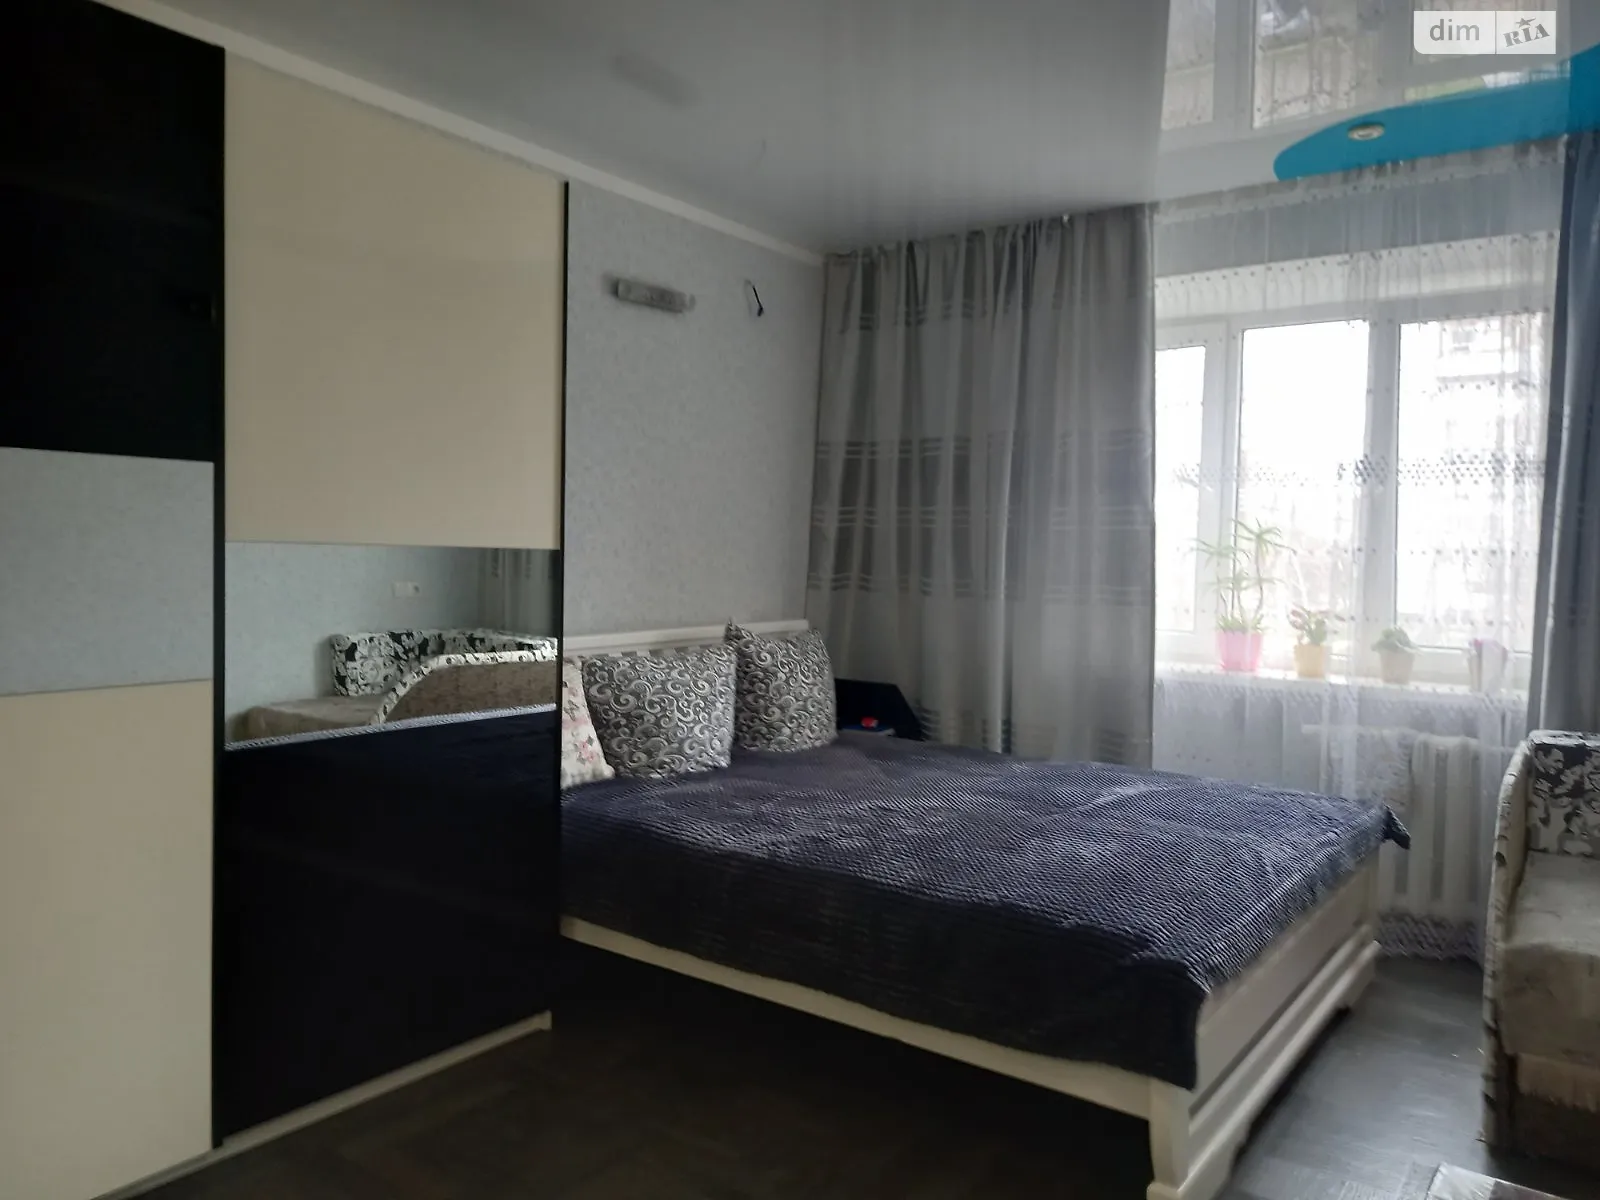 Продается комната 18 кв. м в Черноморске, цена: 11000 $ - фото 1